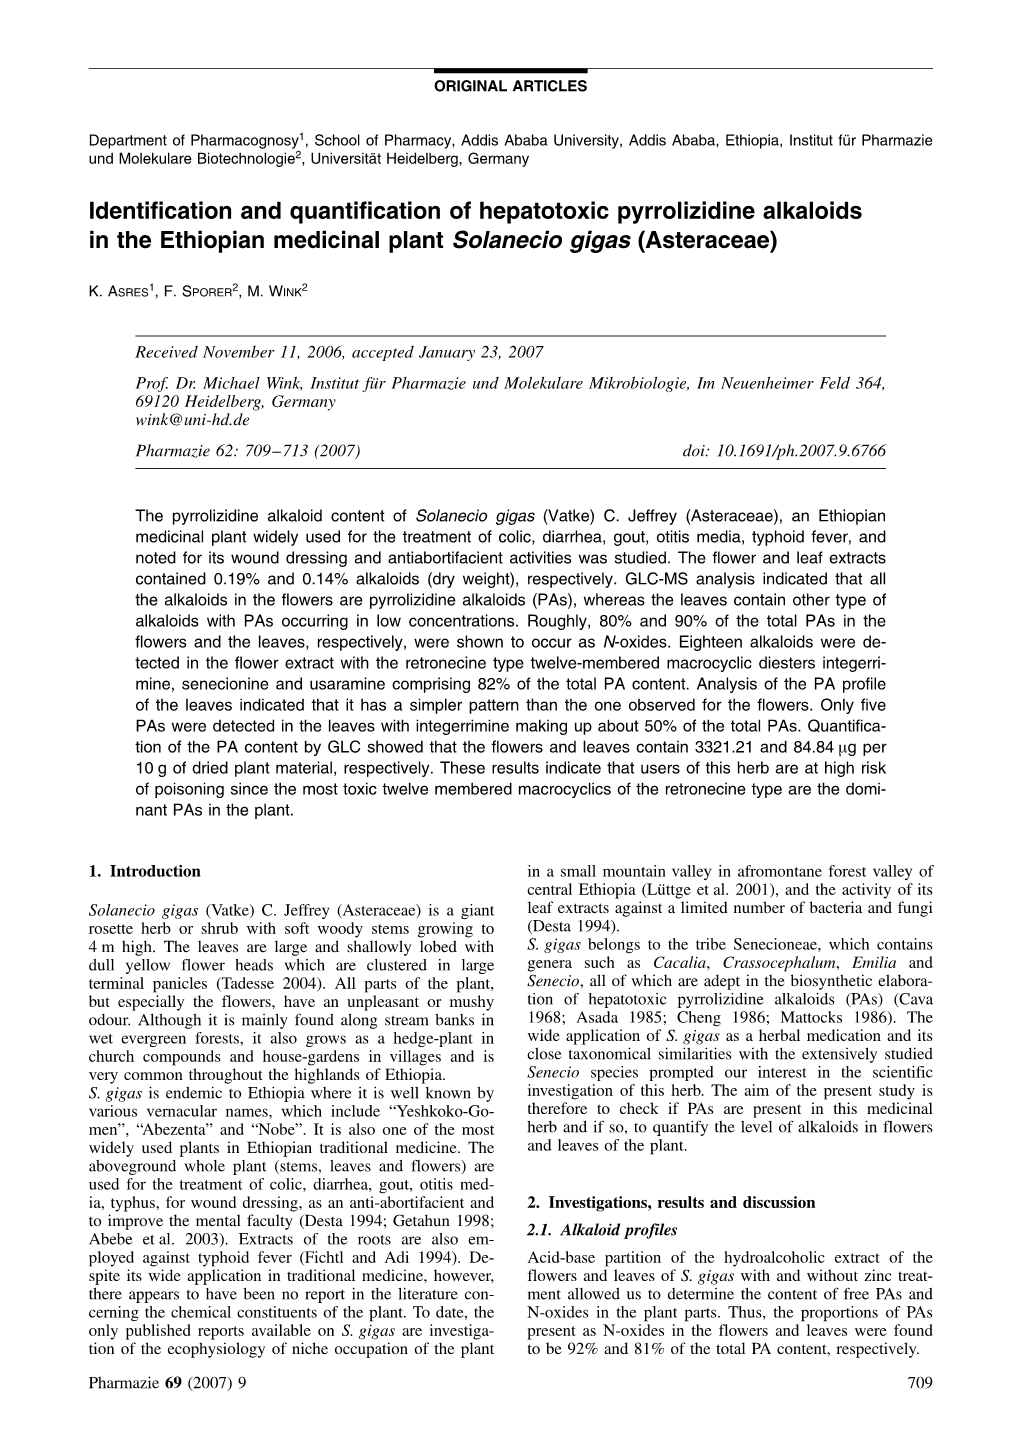 Identification and Quantification of Hepatotoxic Pyrrolizidine Alkaloids in the Ethiopian Medicinal Plant Solanecio Gigas (Asteraceae)